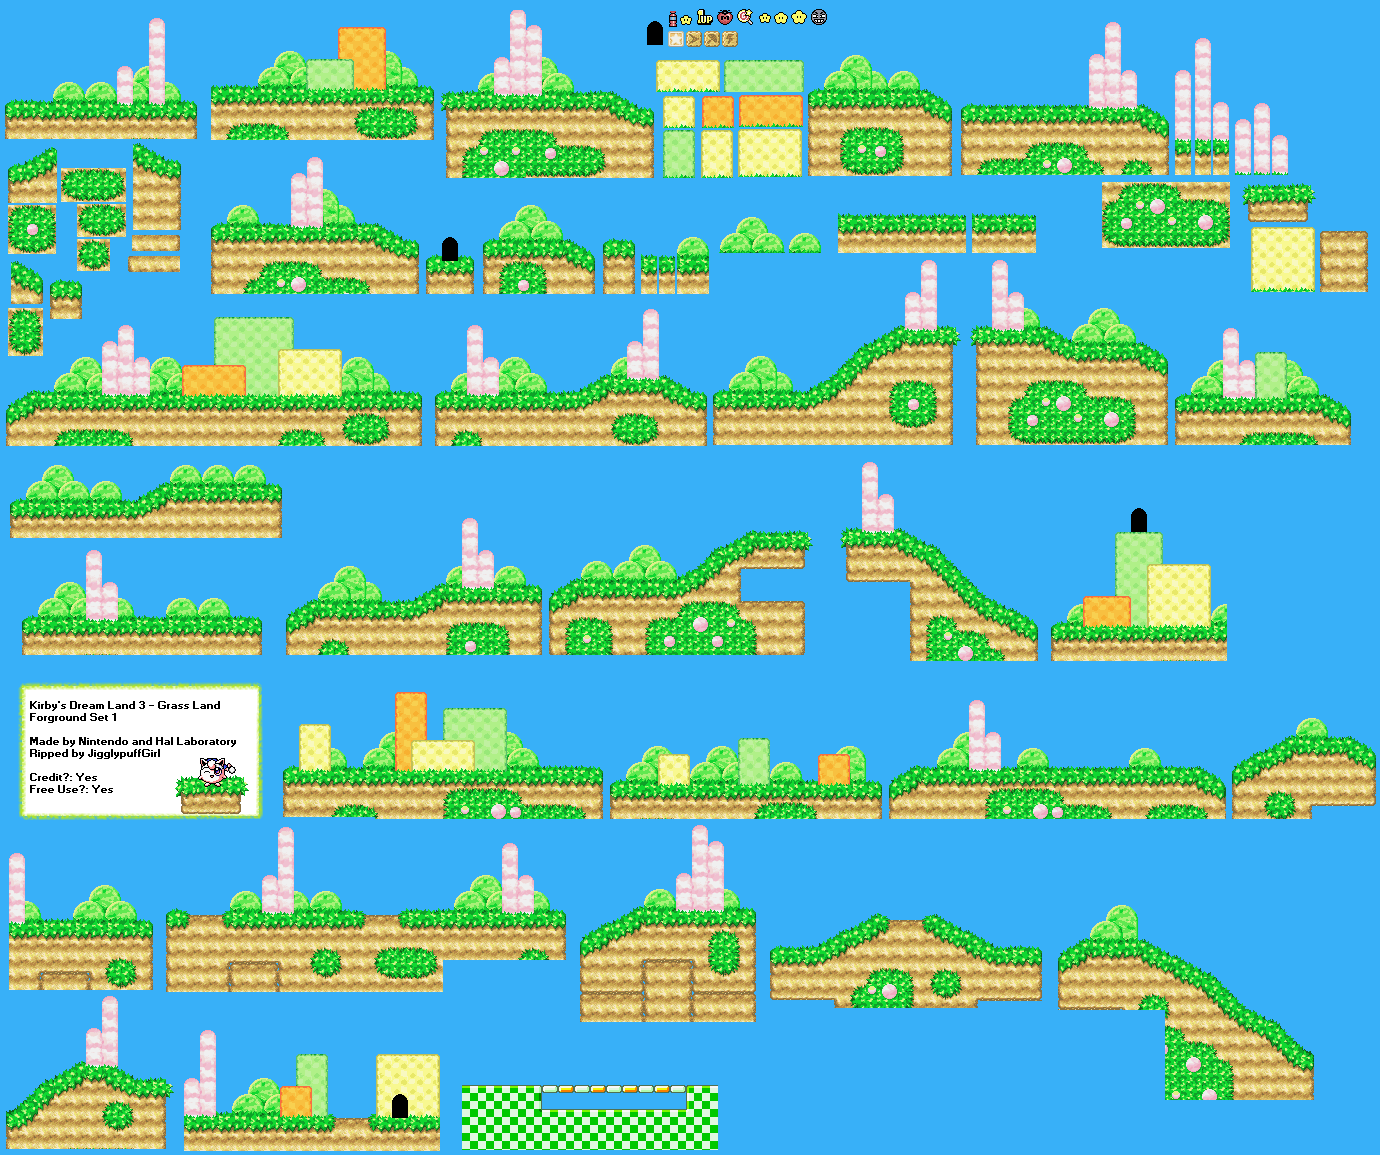 Kirby's Dream Land 3 - Grass Land Foreground Set 1